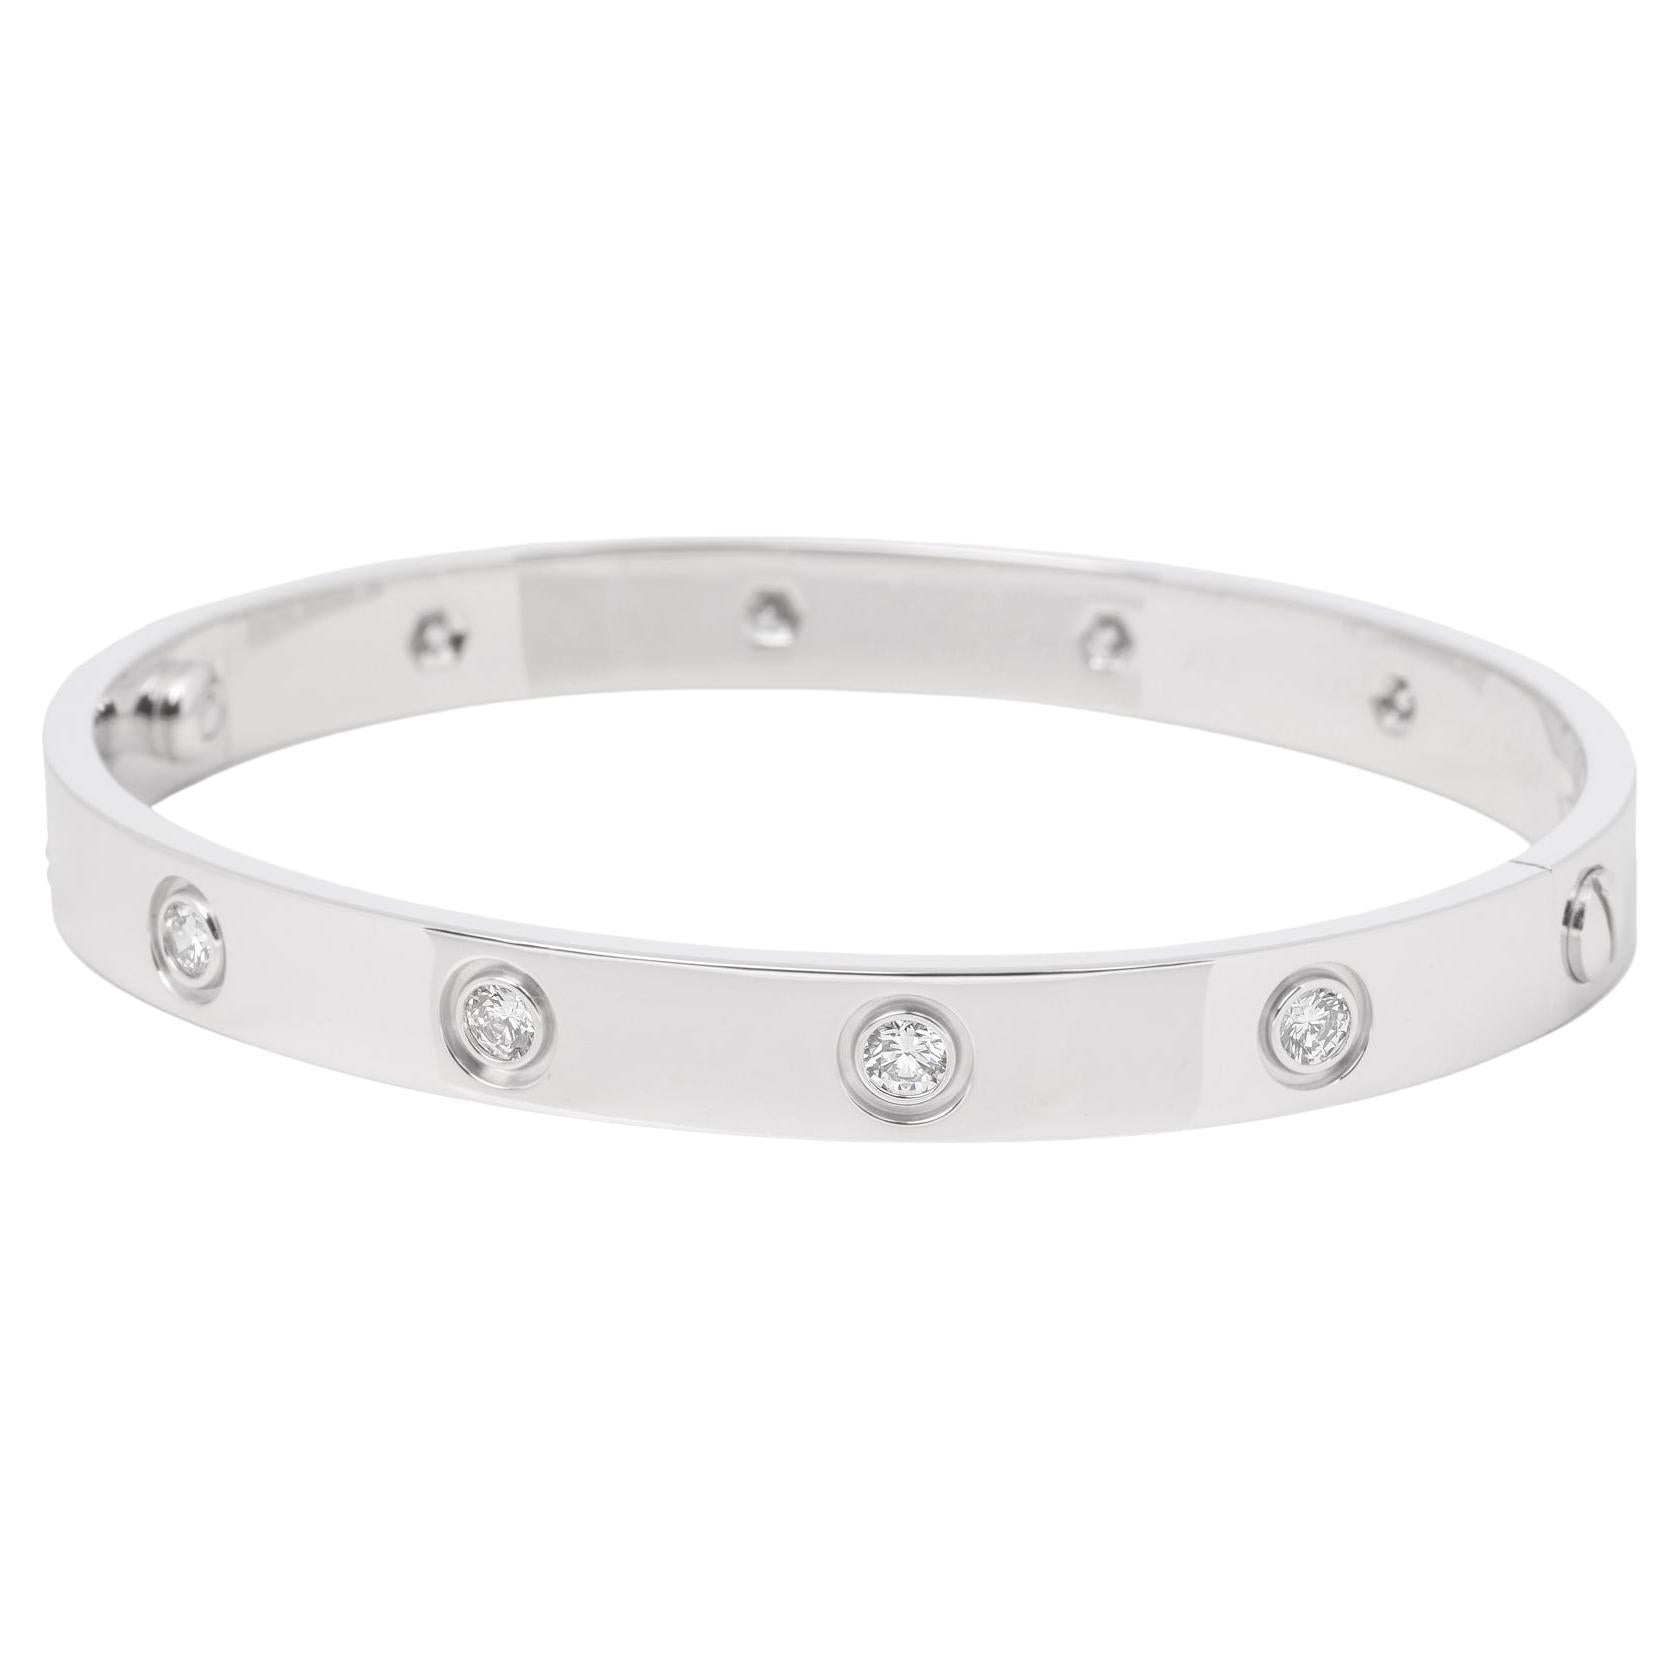 Do Cartier bracelets have real diamonds?